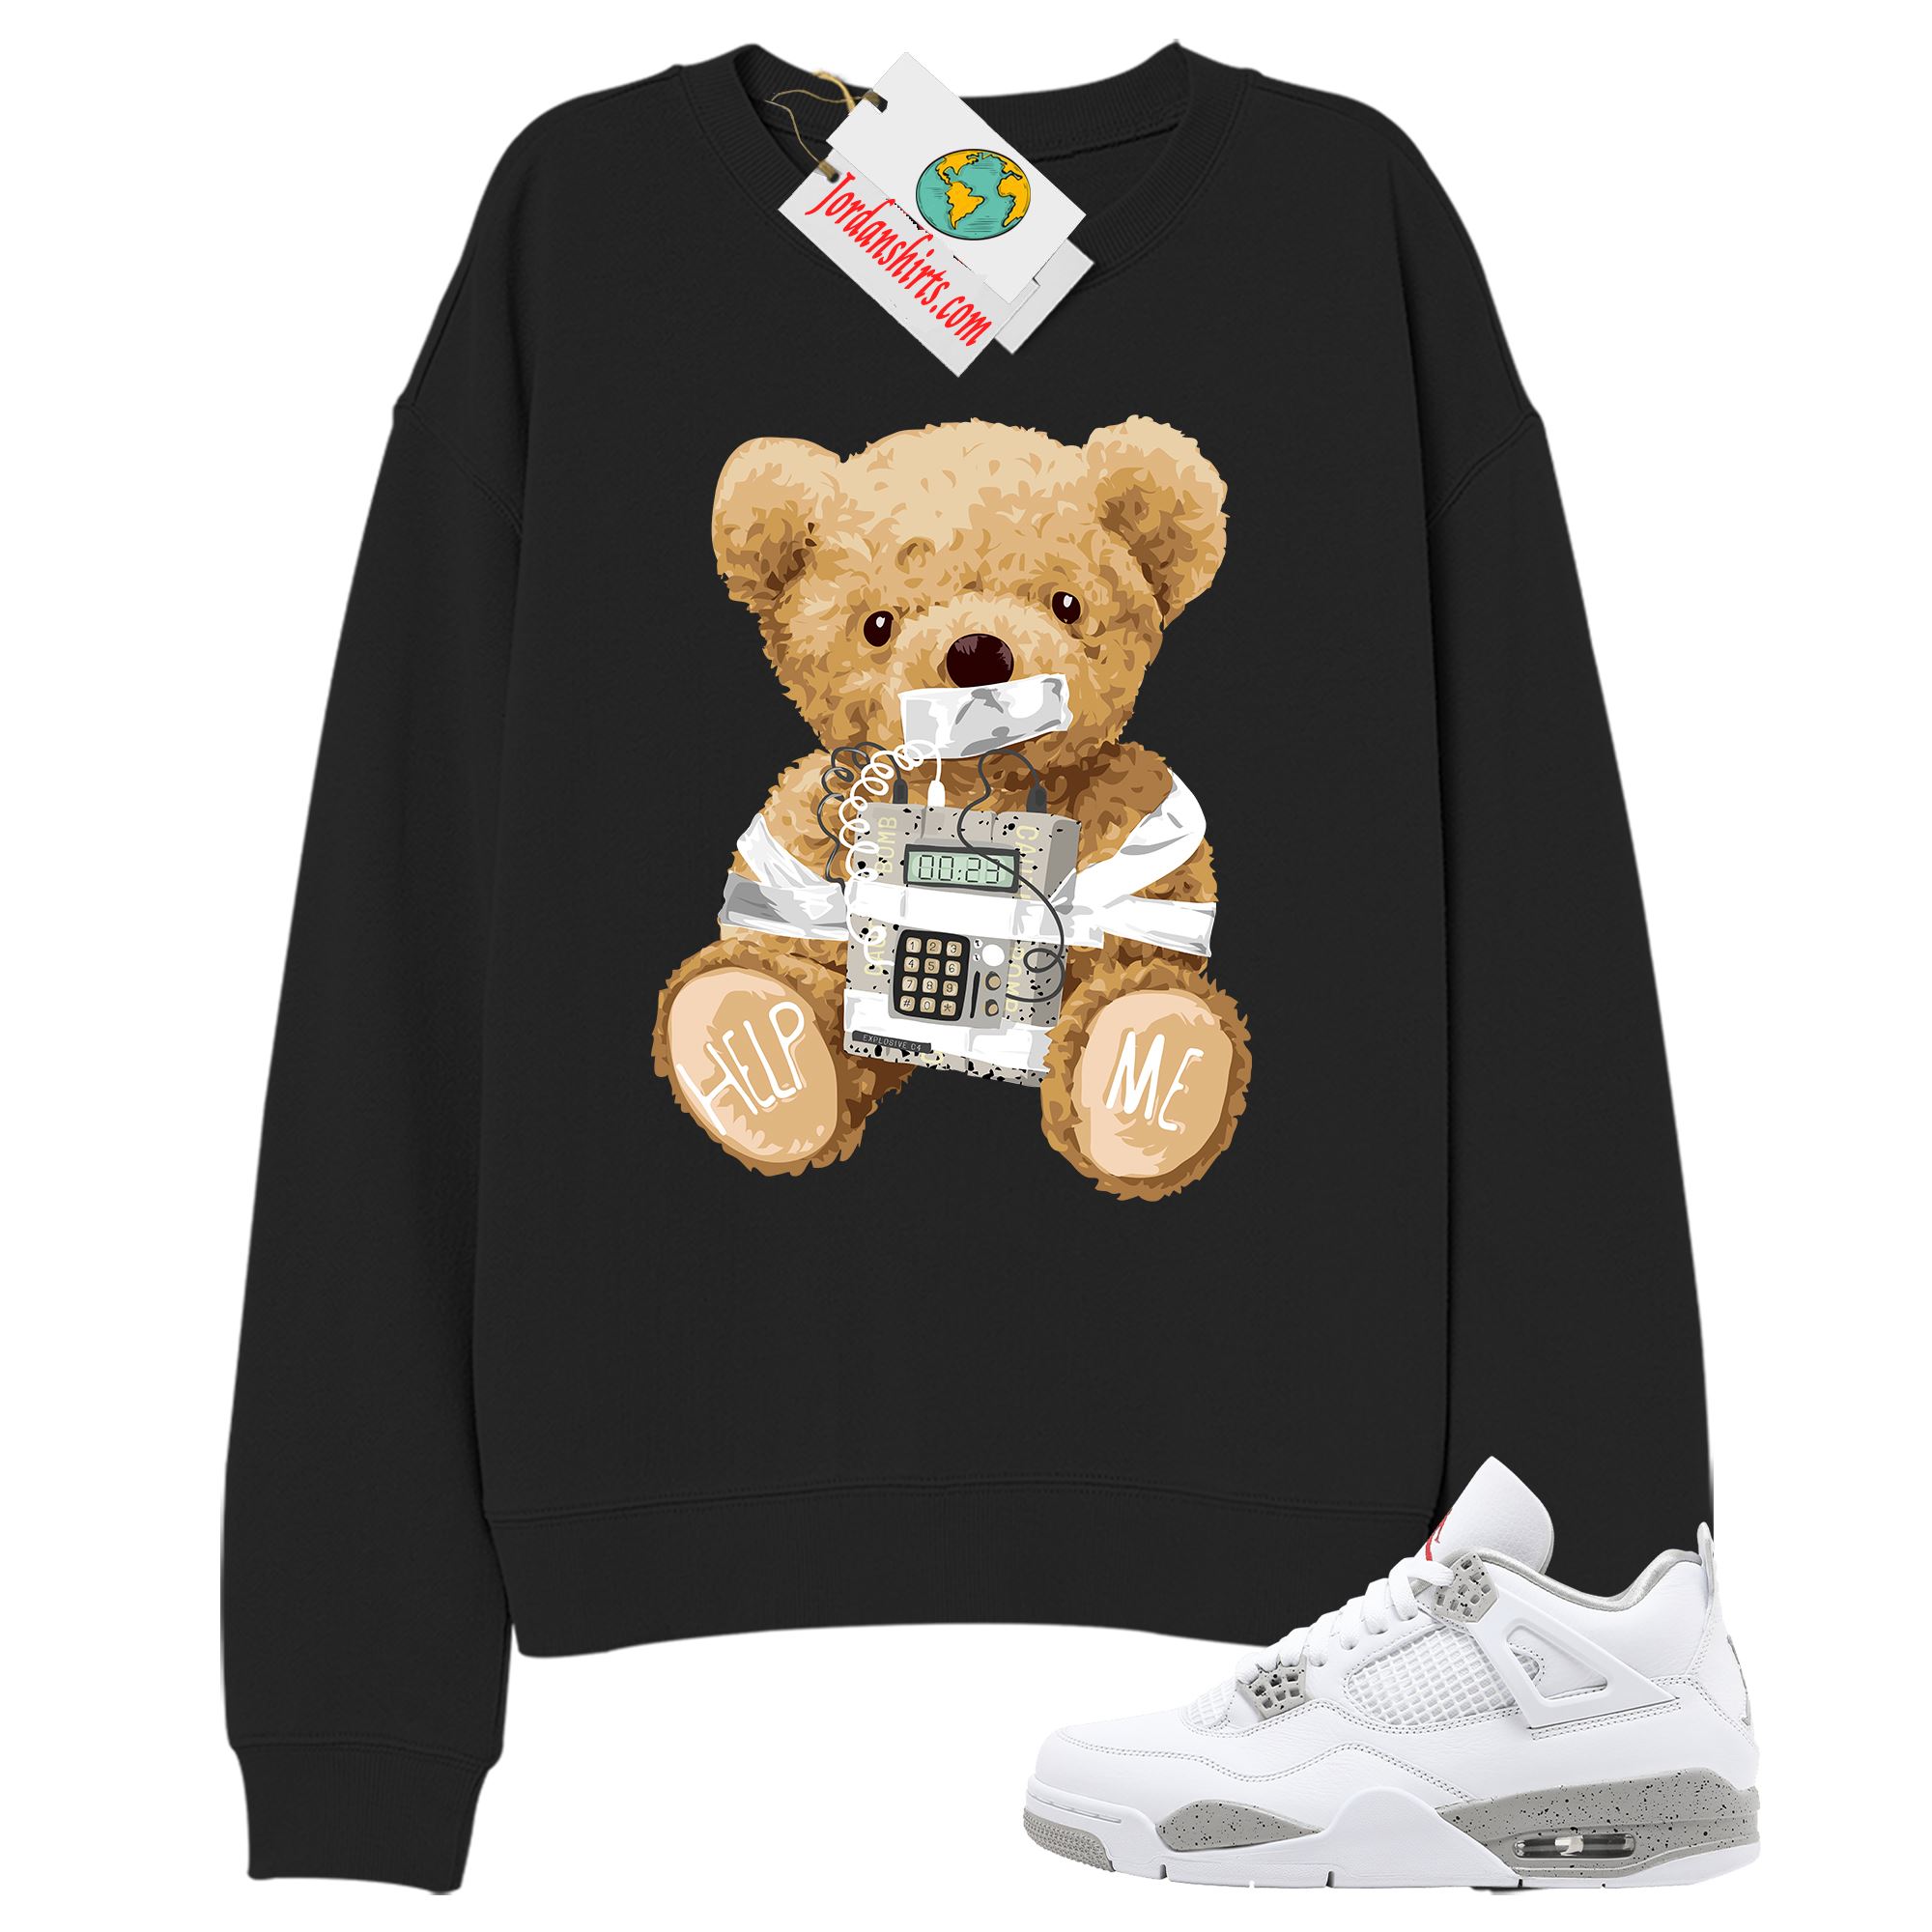 Jordan 4 Sweatshirt, Teddy Bear Bomb Black Sweatshirt Air Jordan 4 White Oreo 4s Full Size Up To 5xl